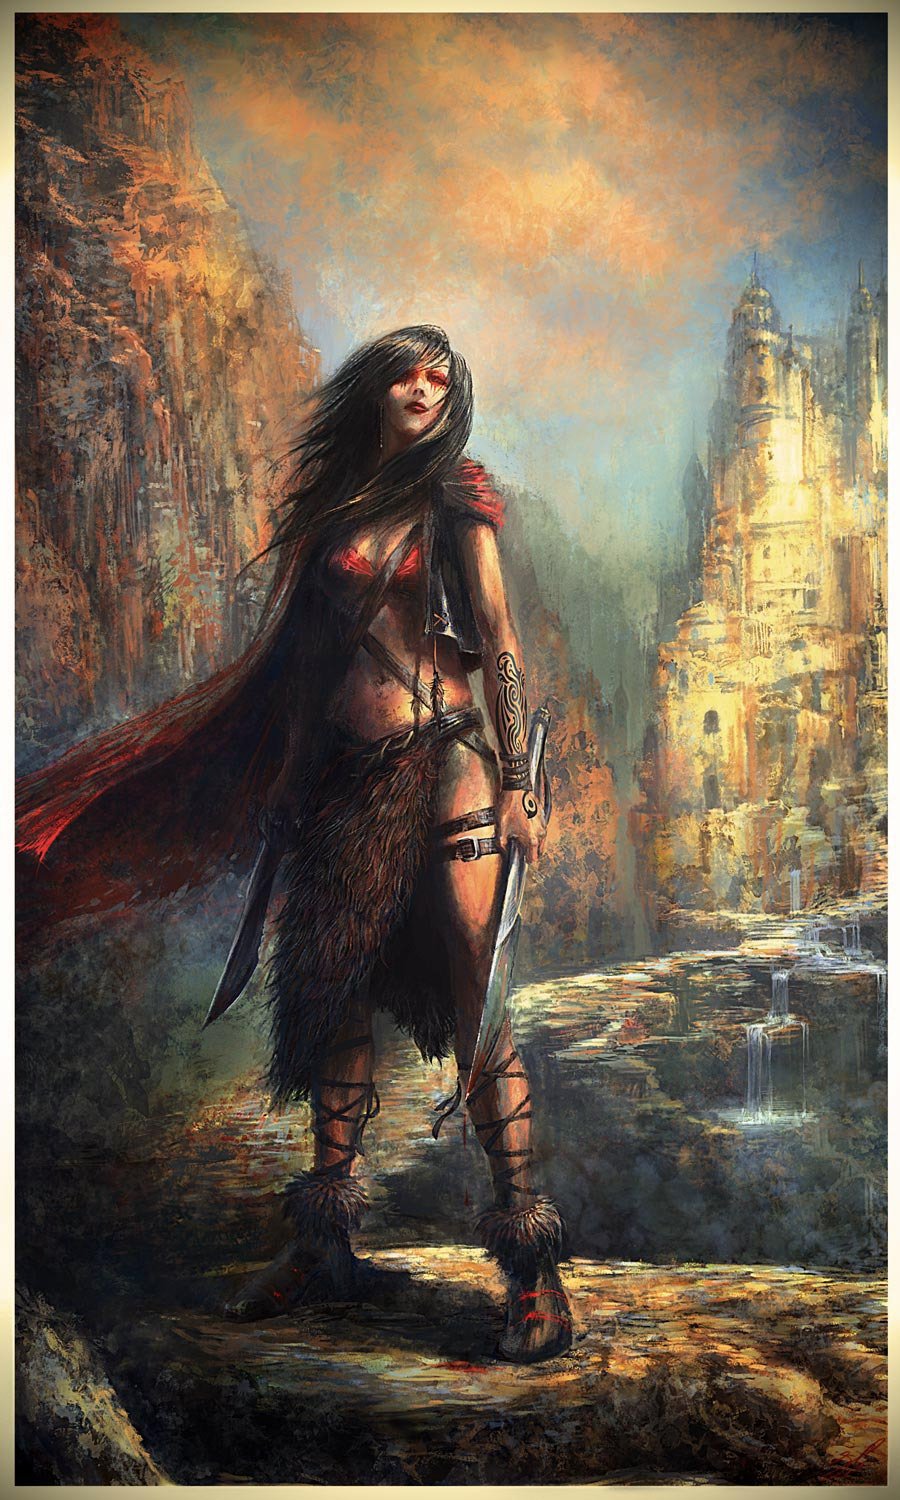 Women Warrior Art - ID: 53911